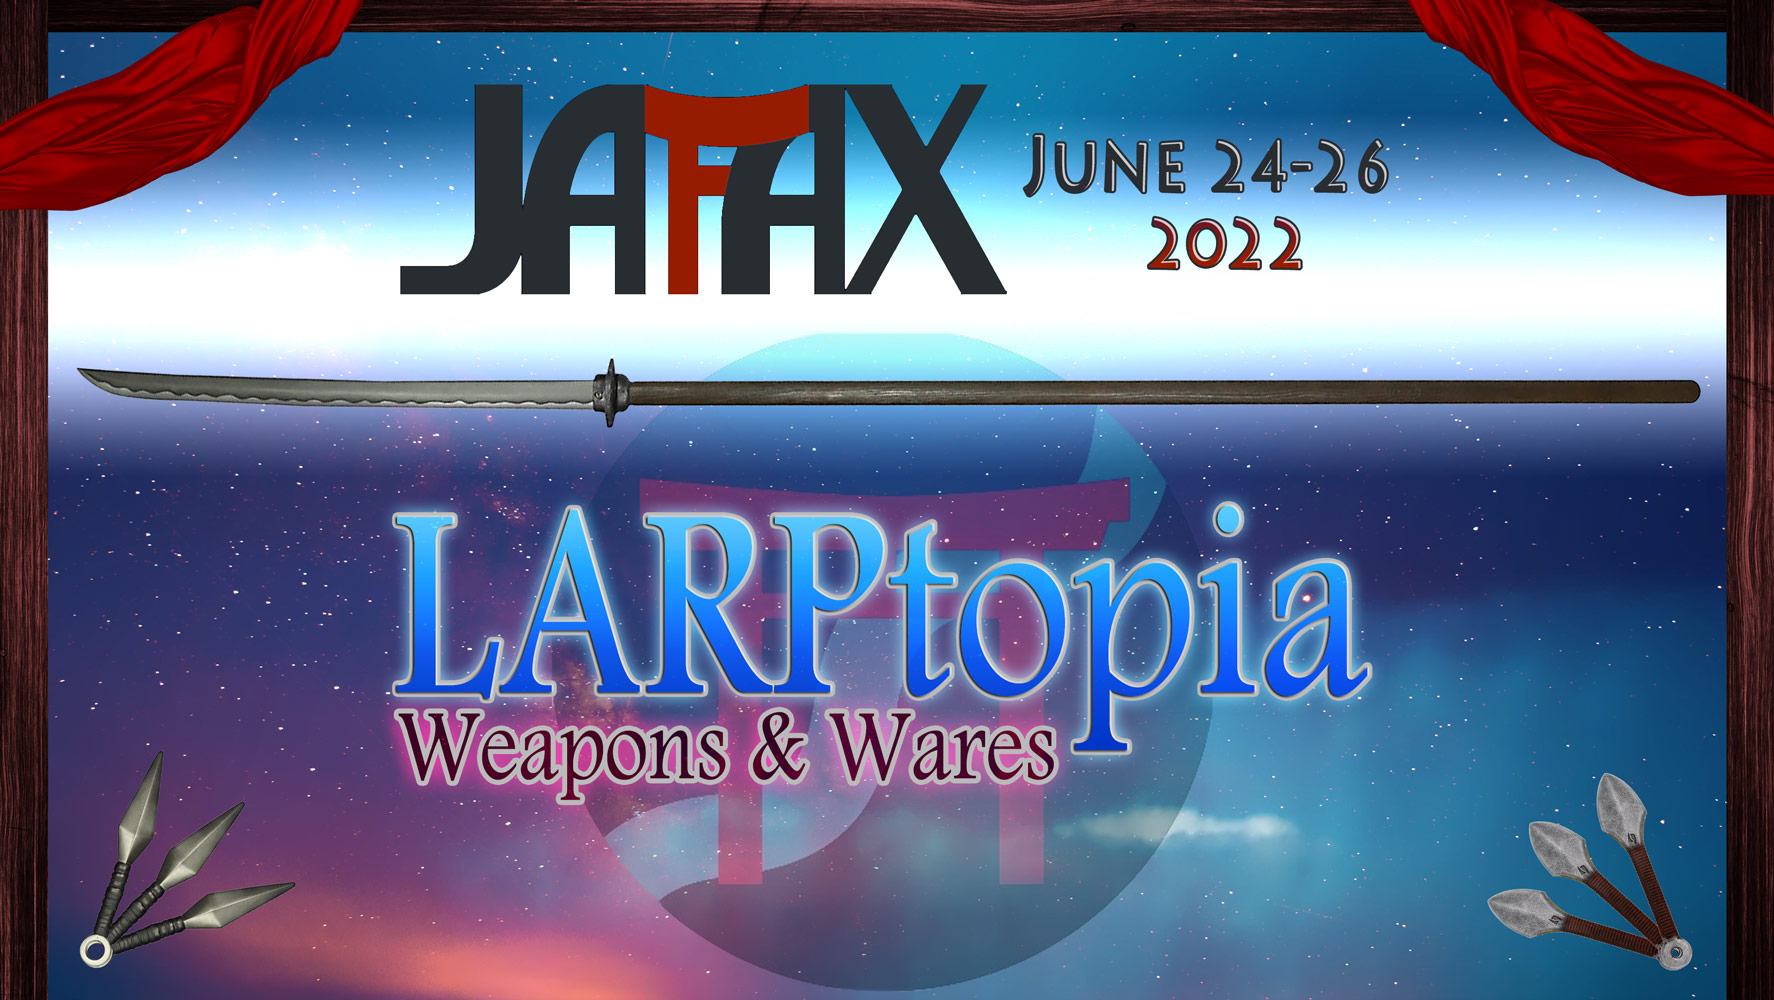 JAFAX 2022 Event